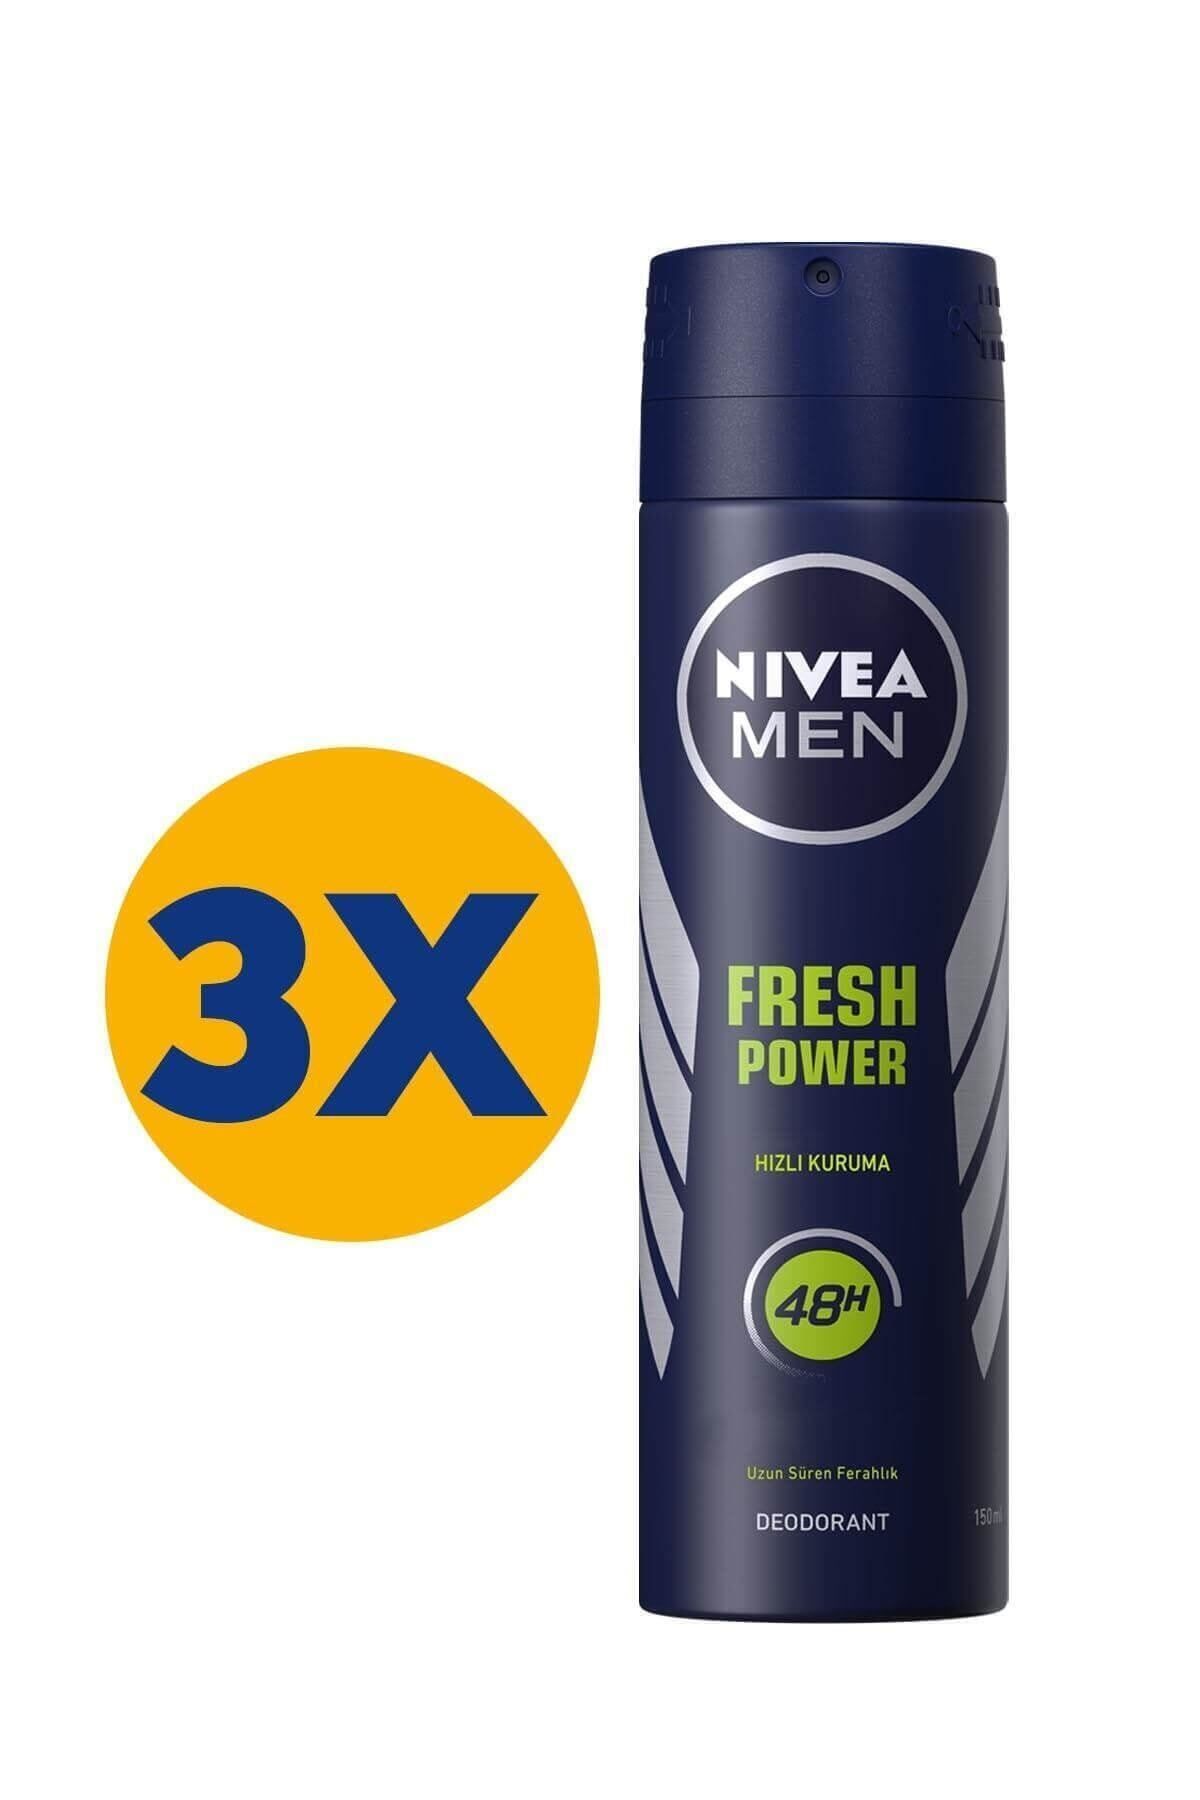 NIVEA Men Erkek Sprey Deodorant Fresh Power 150 ml X3 Adet, 48 Saat Anti-perspirant Koruma Ve Ferah Koku